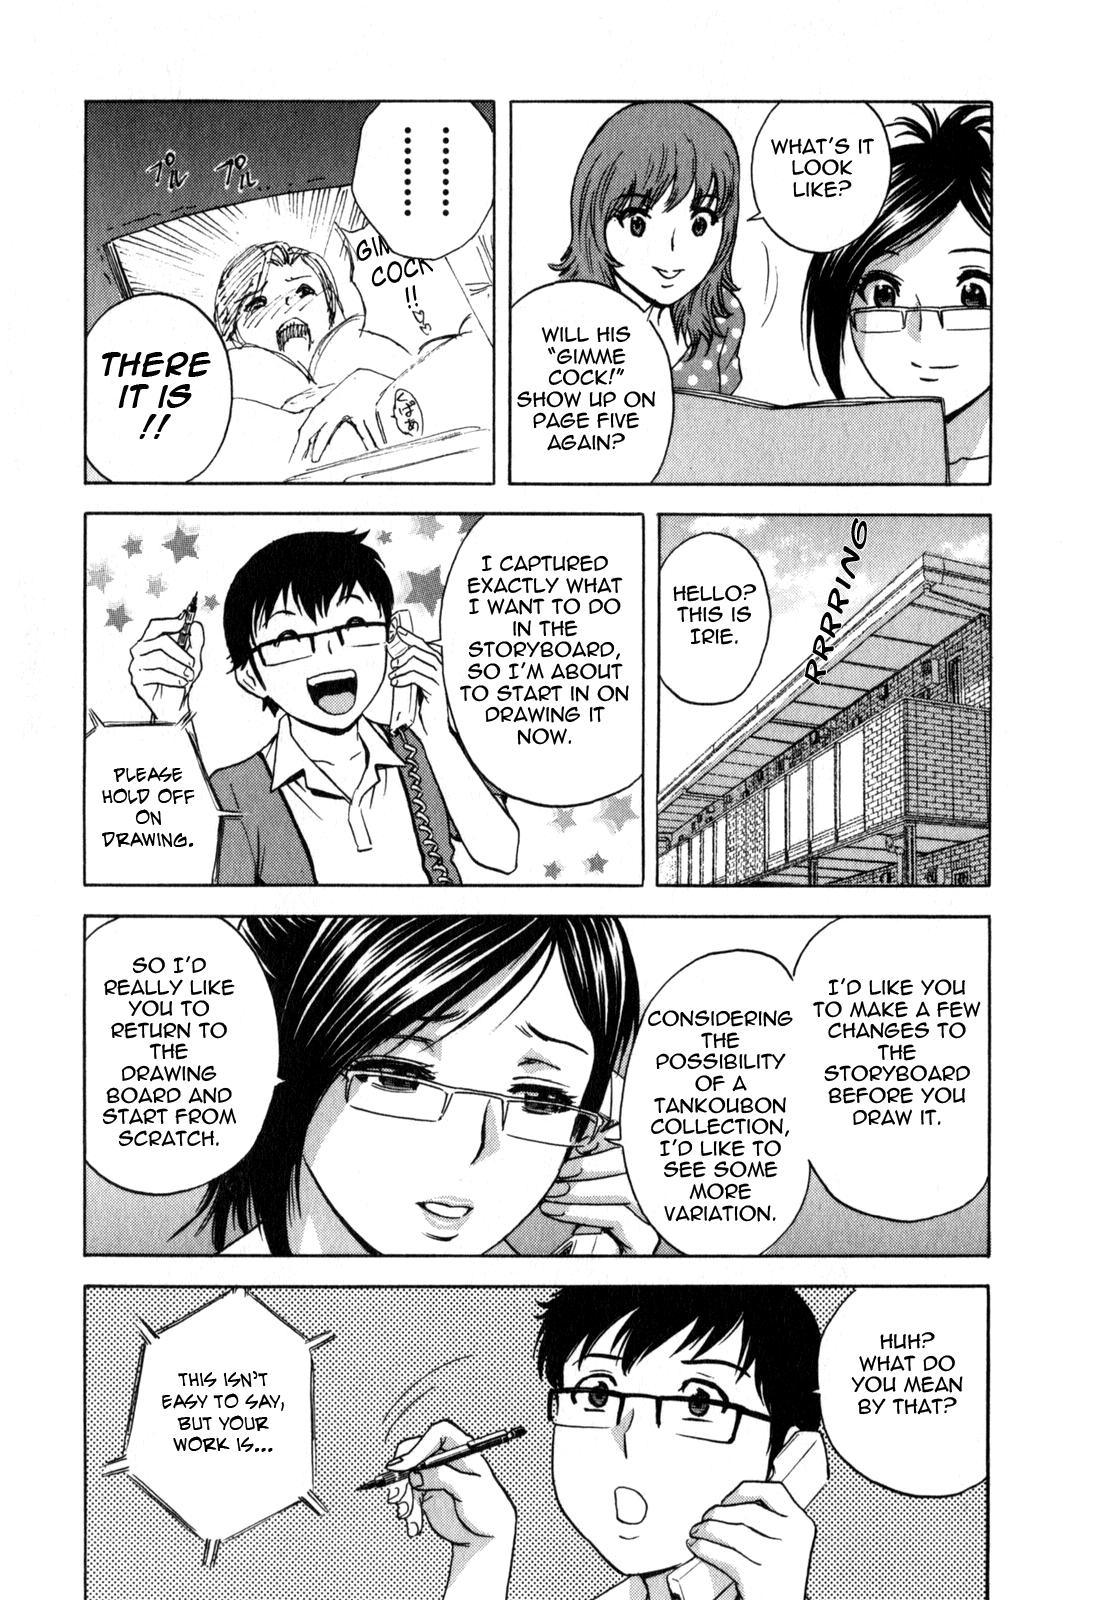 [Hidemaru] Life with Married Women Just Like a Manga 2 - Ch. 1-8 [English] {Tadanohito} 147